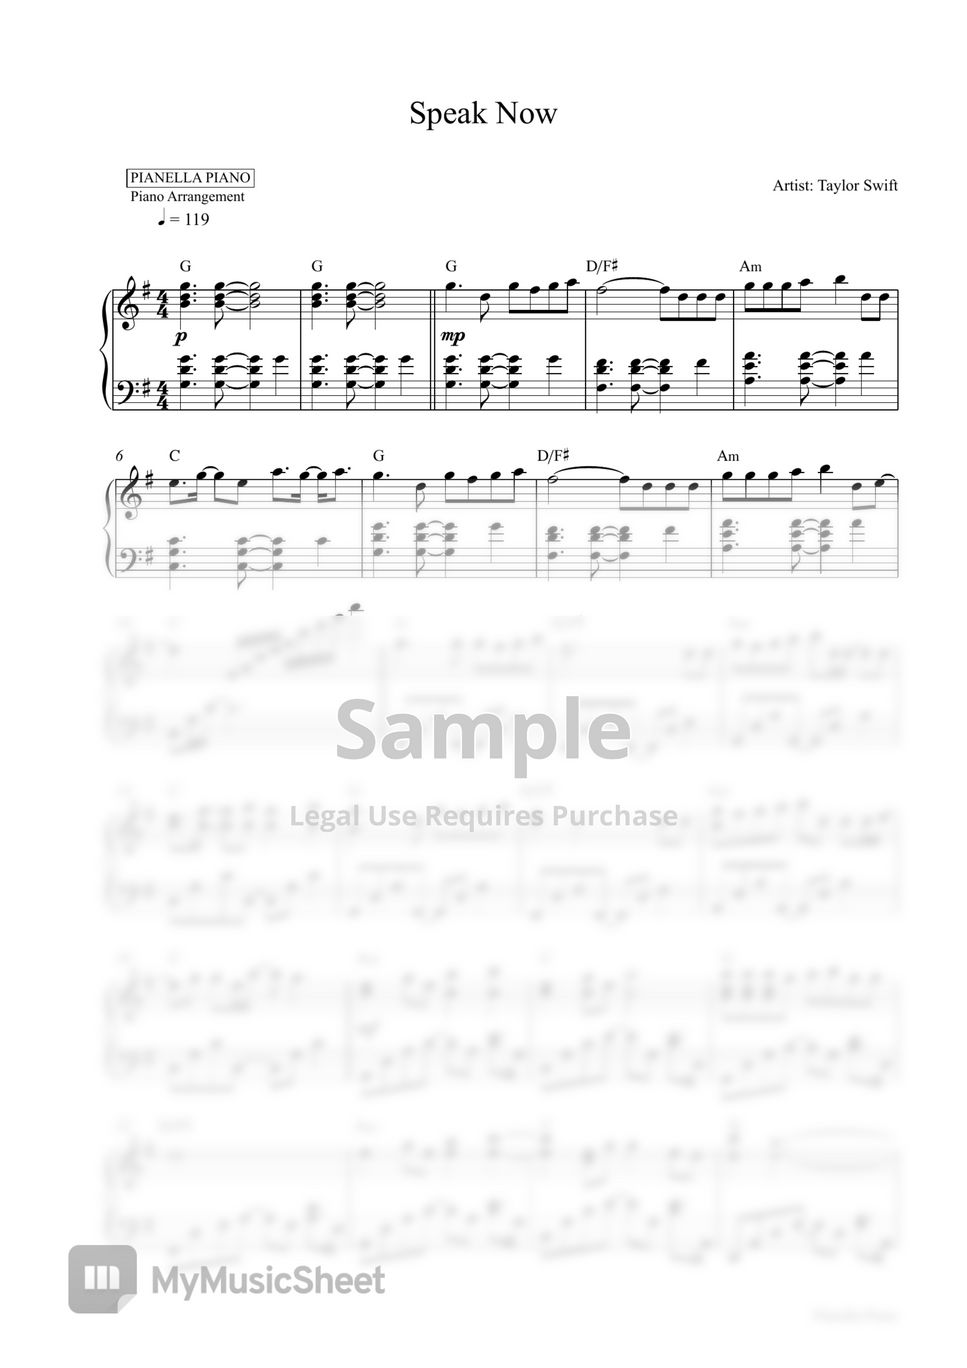 Taylor Swift - Speak Now (Piano Sheet) by Pianella Piano